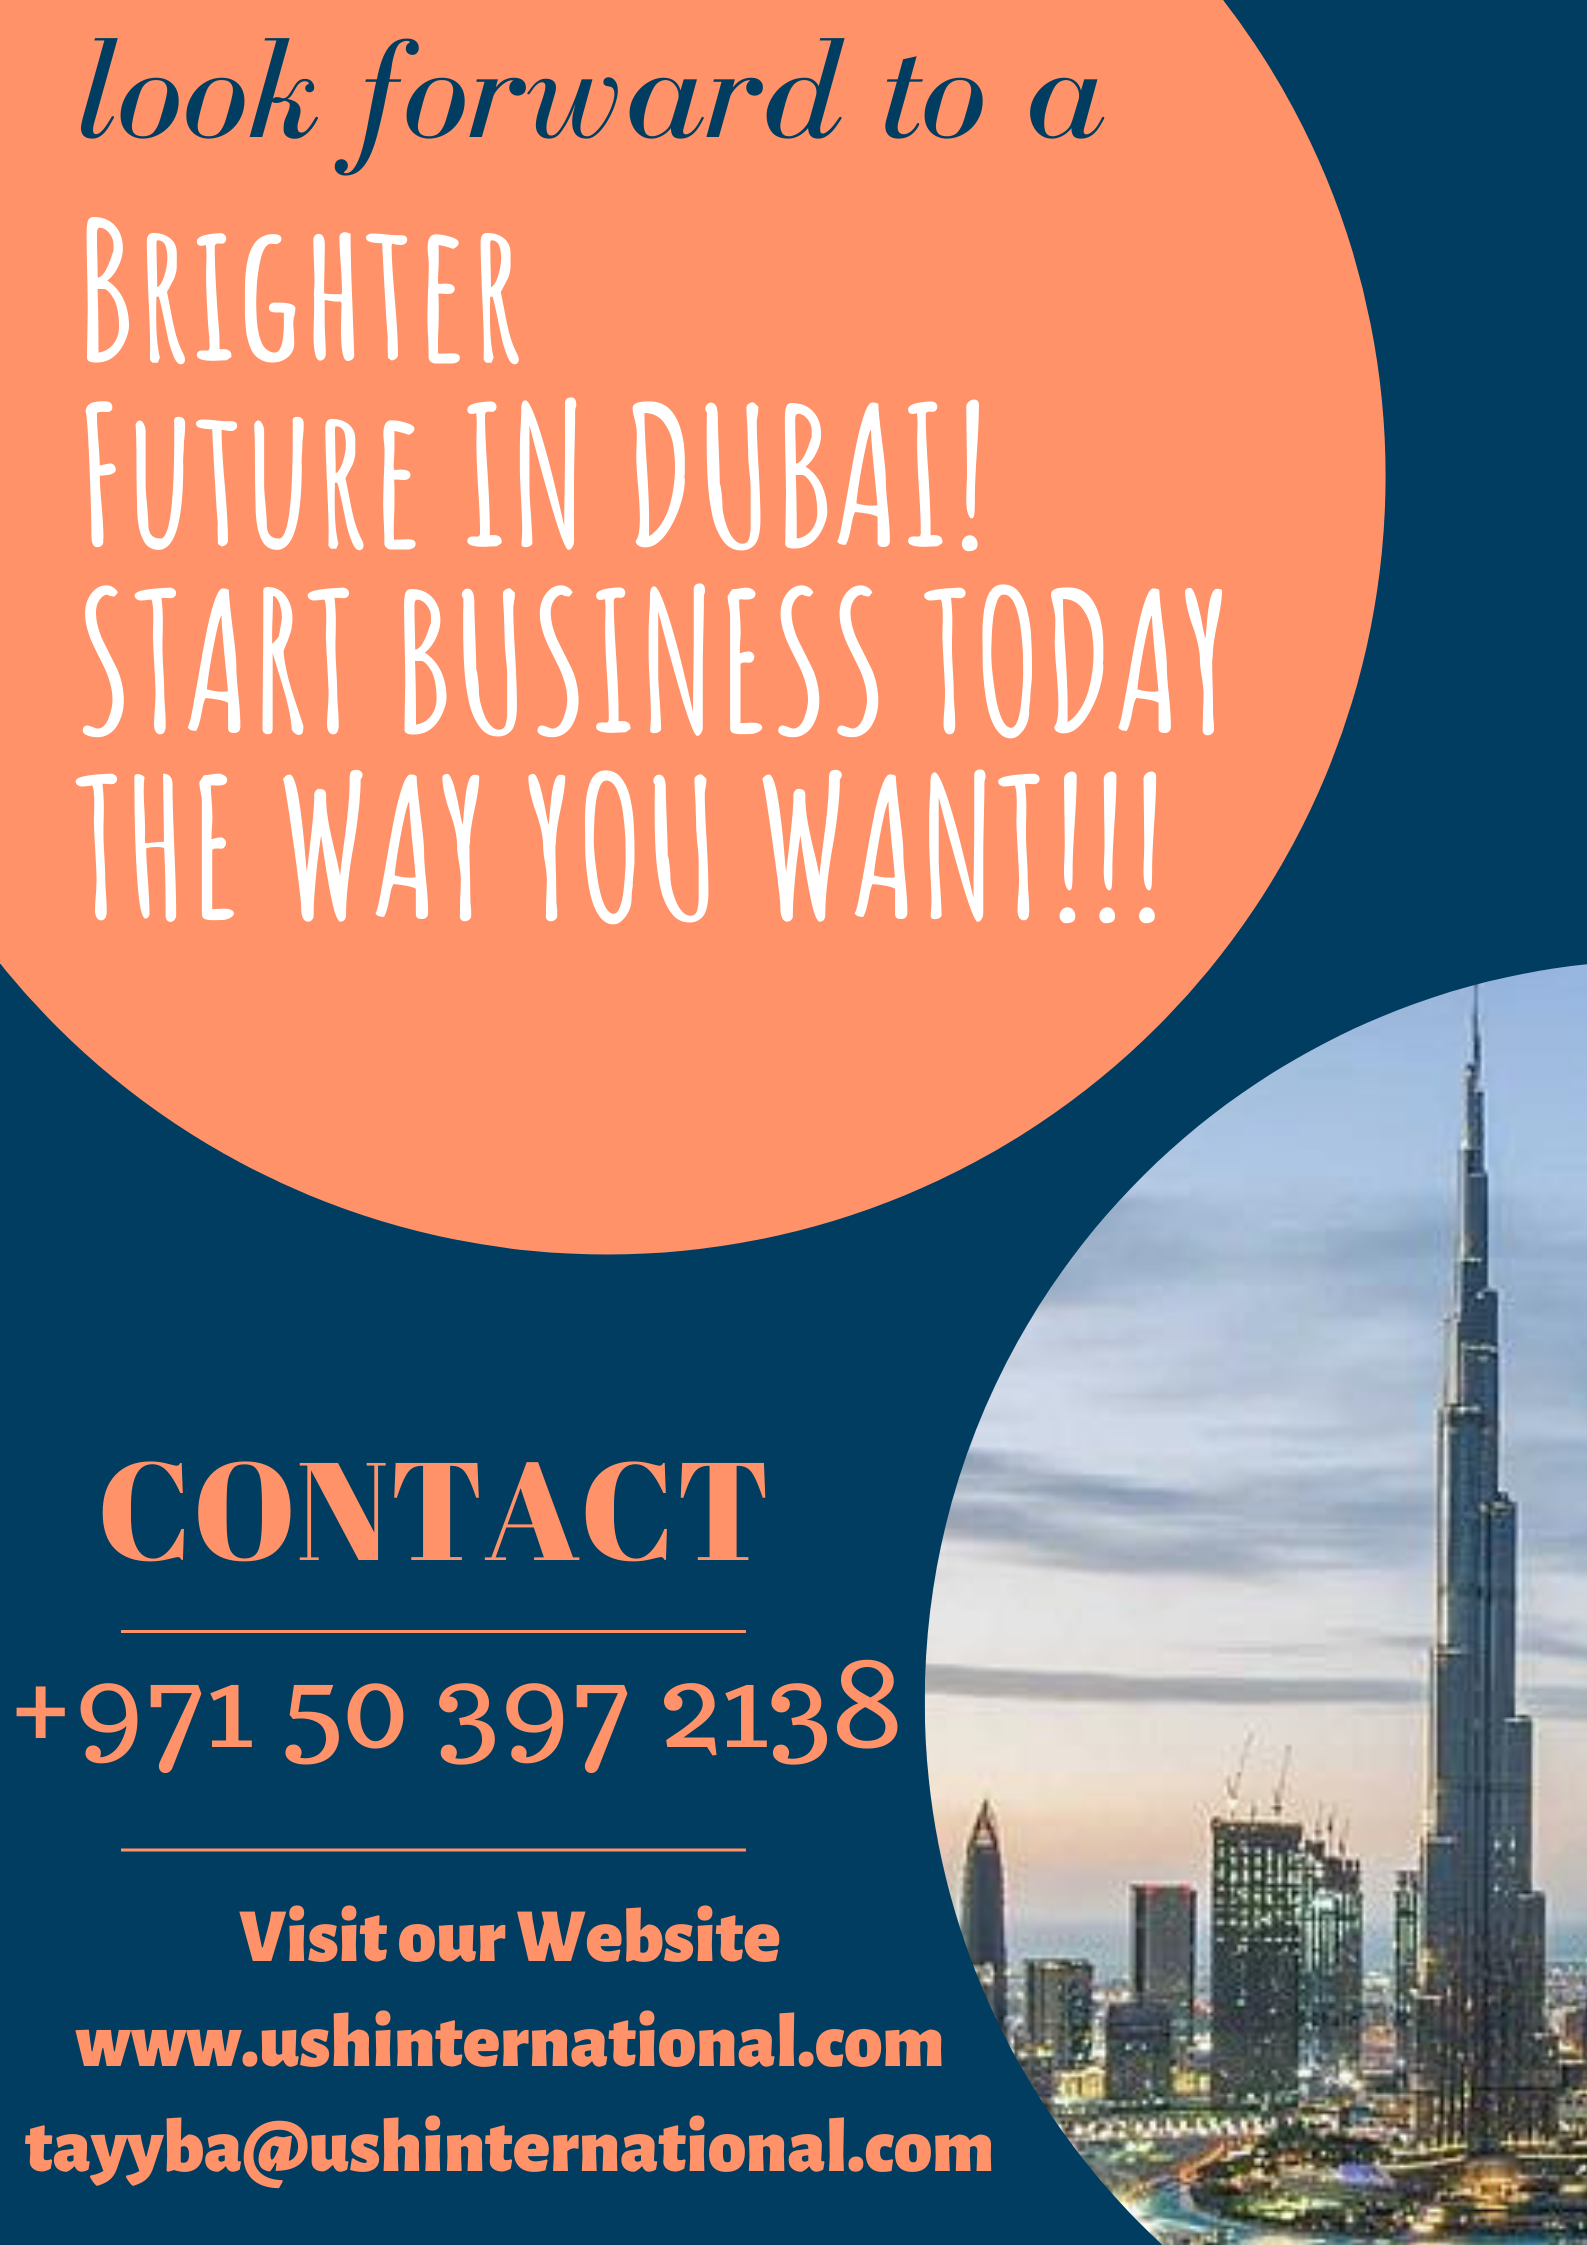 U S H International at your Services 0503972138 UAE License, visa